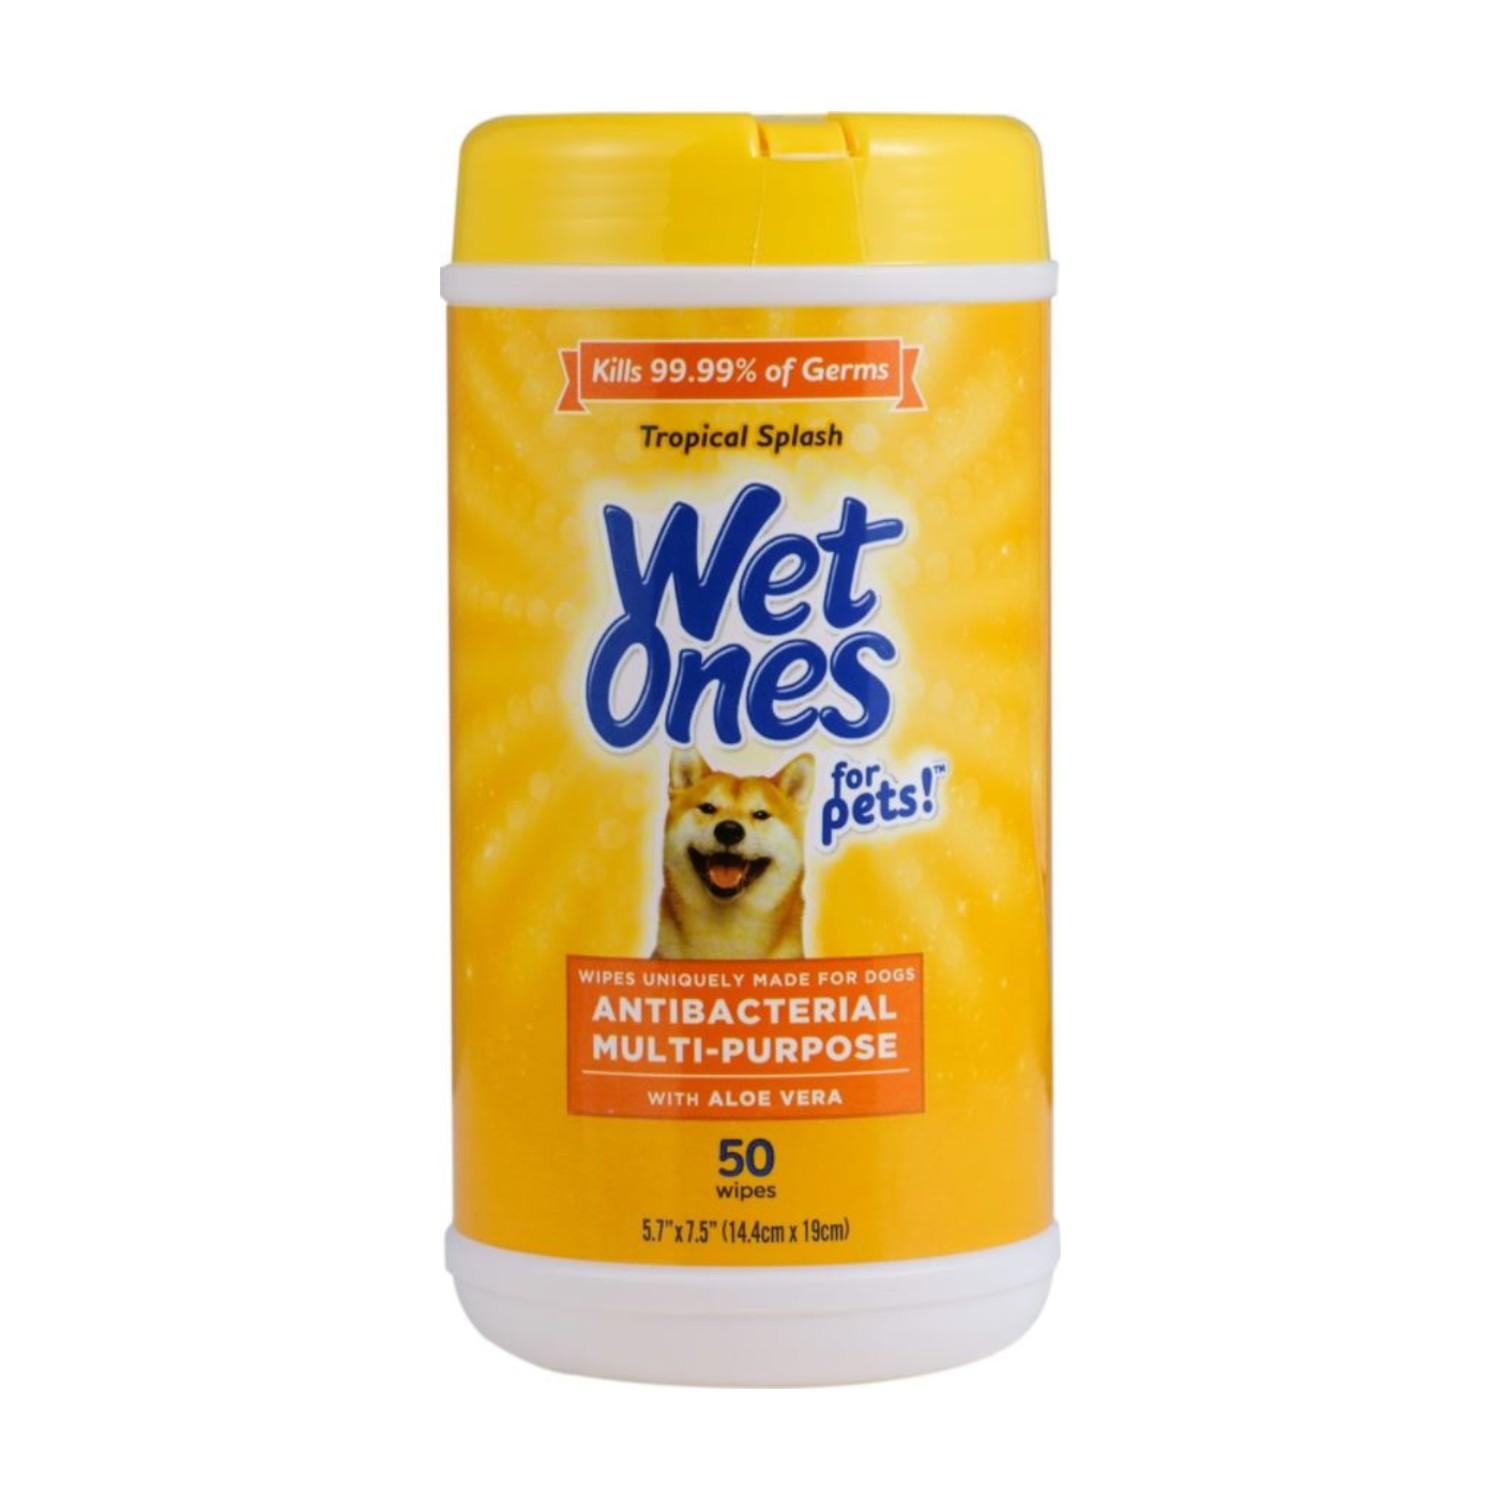 Wet Ones For Pets Wipes, Tropical Splash, Antibacterial Multi-Purpose - 100 wipes